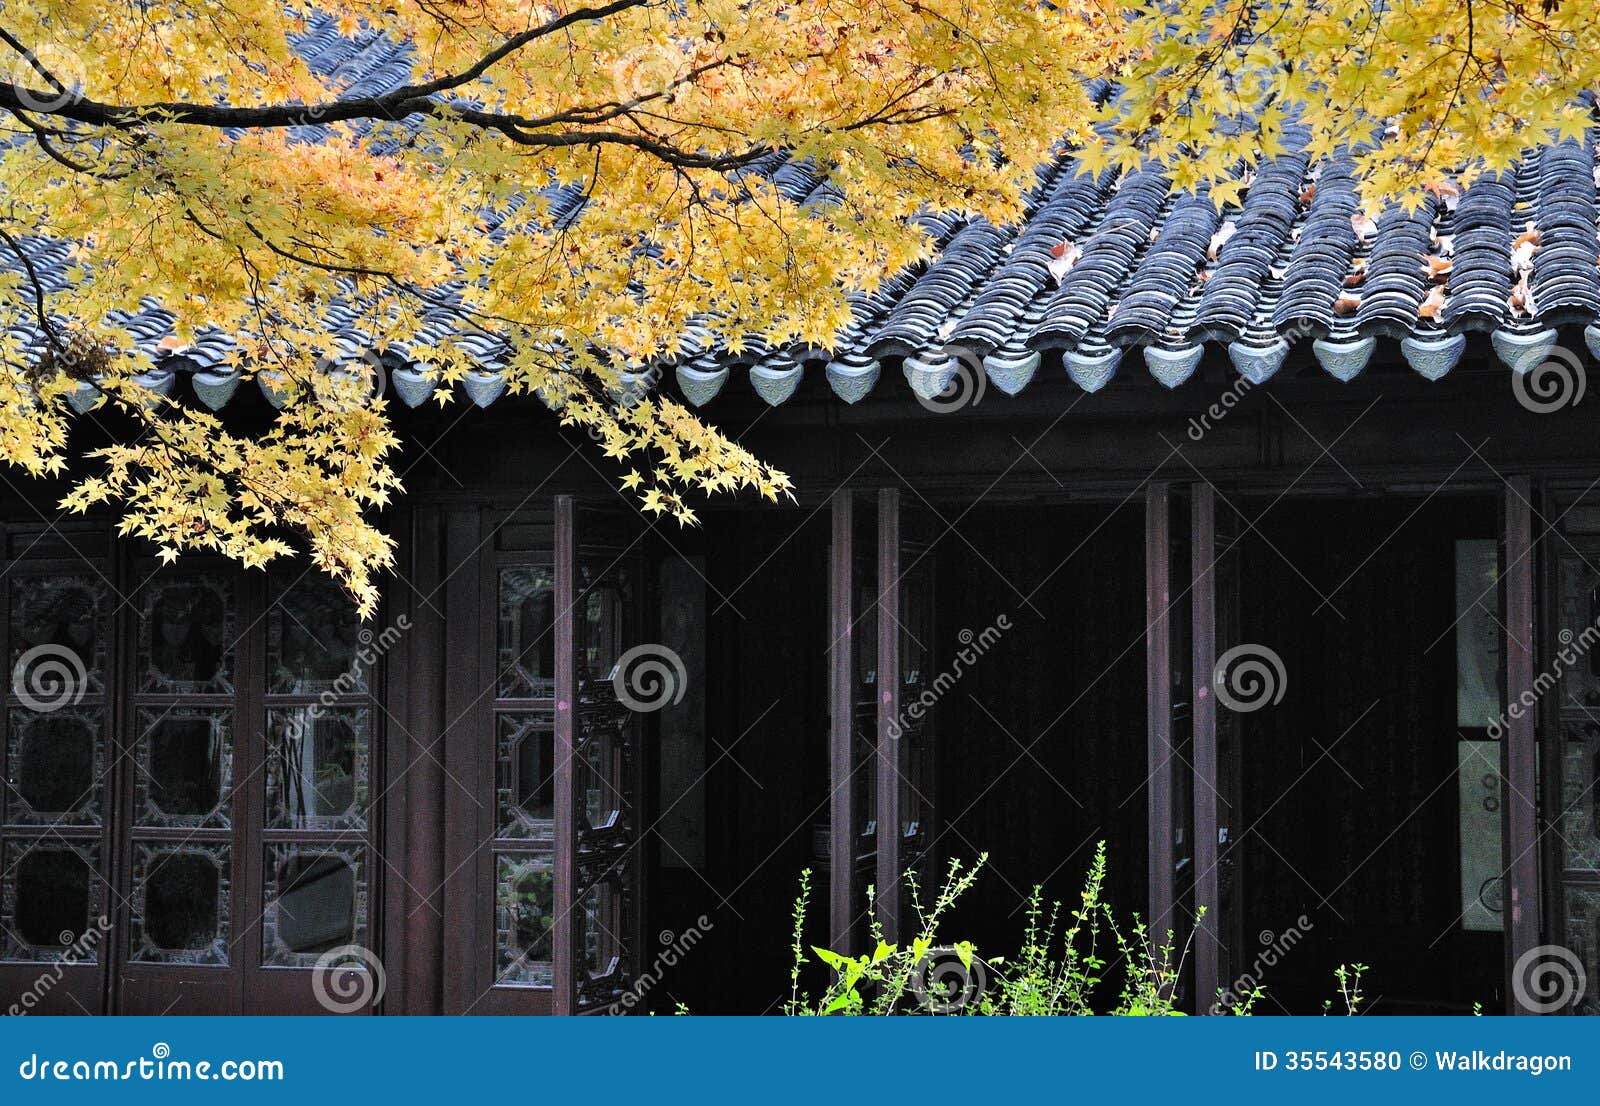 Lingering garden in suzhou stock photo. Image of suzhou - 35543580